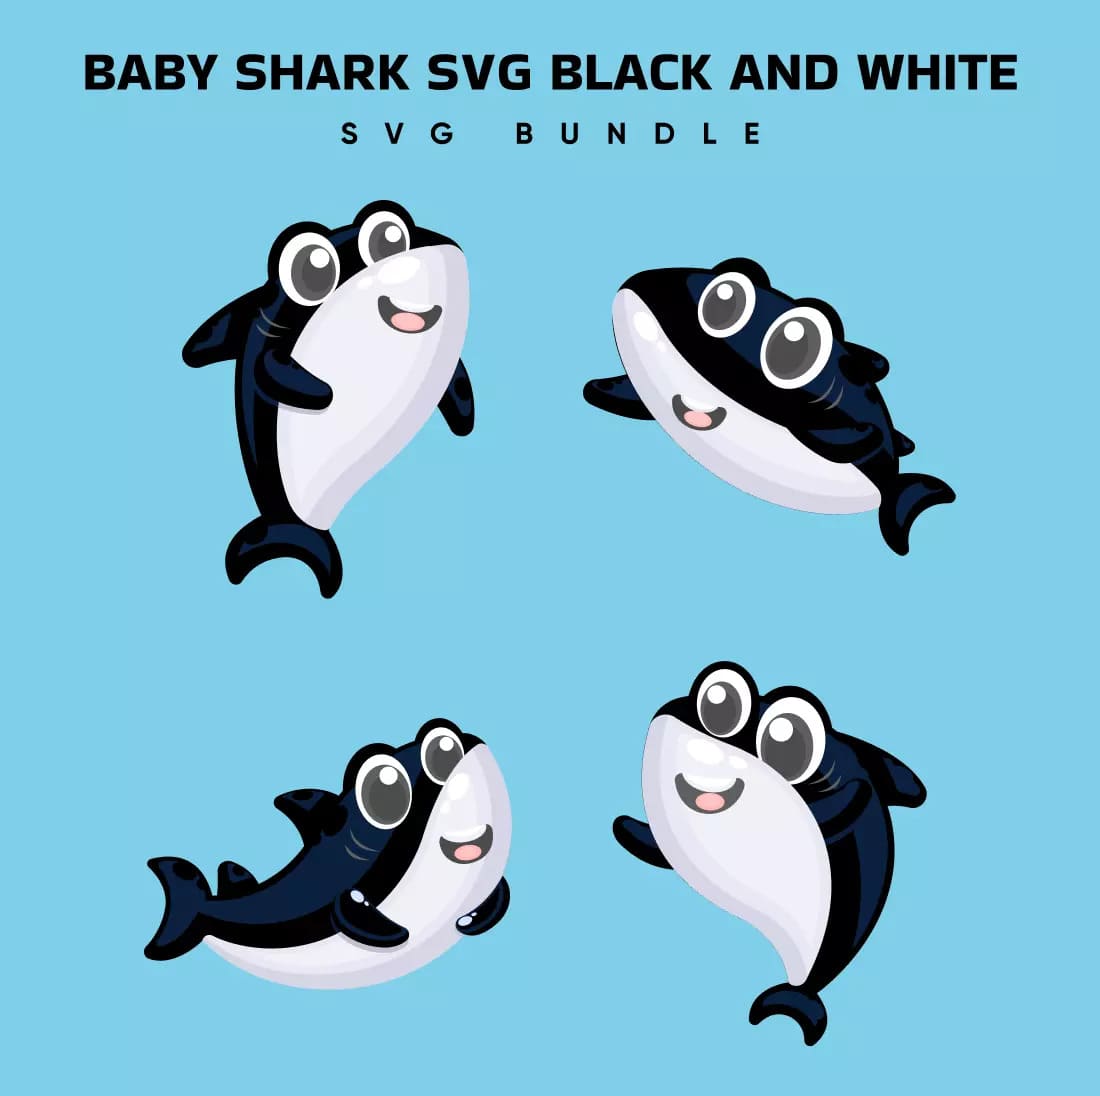 Baby Shark SVG Black and White SVG Bundle Preview image.